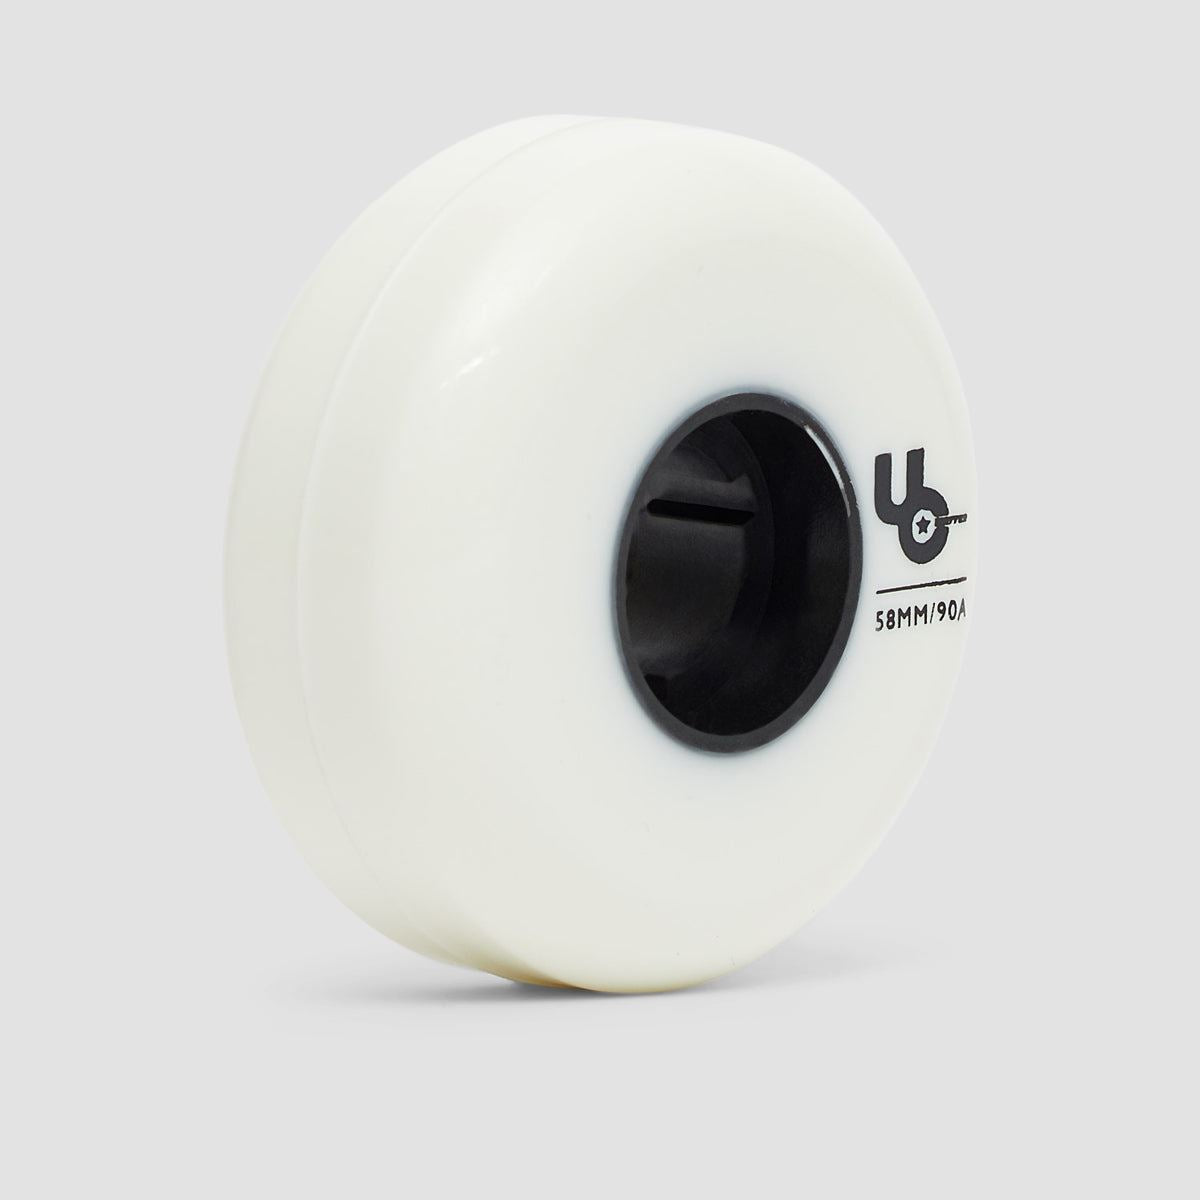 Undercover Team 90A Inline Wheels x4 White 58mm